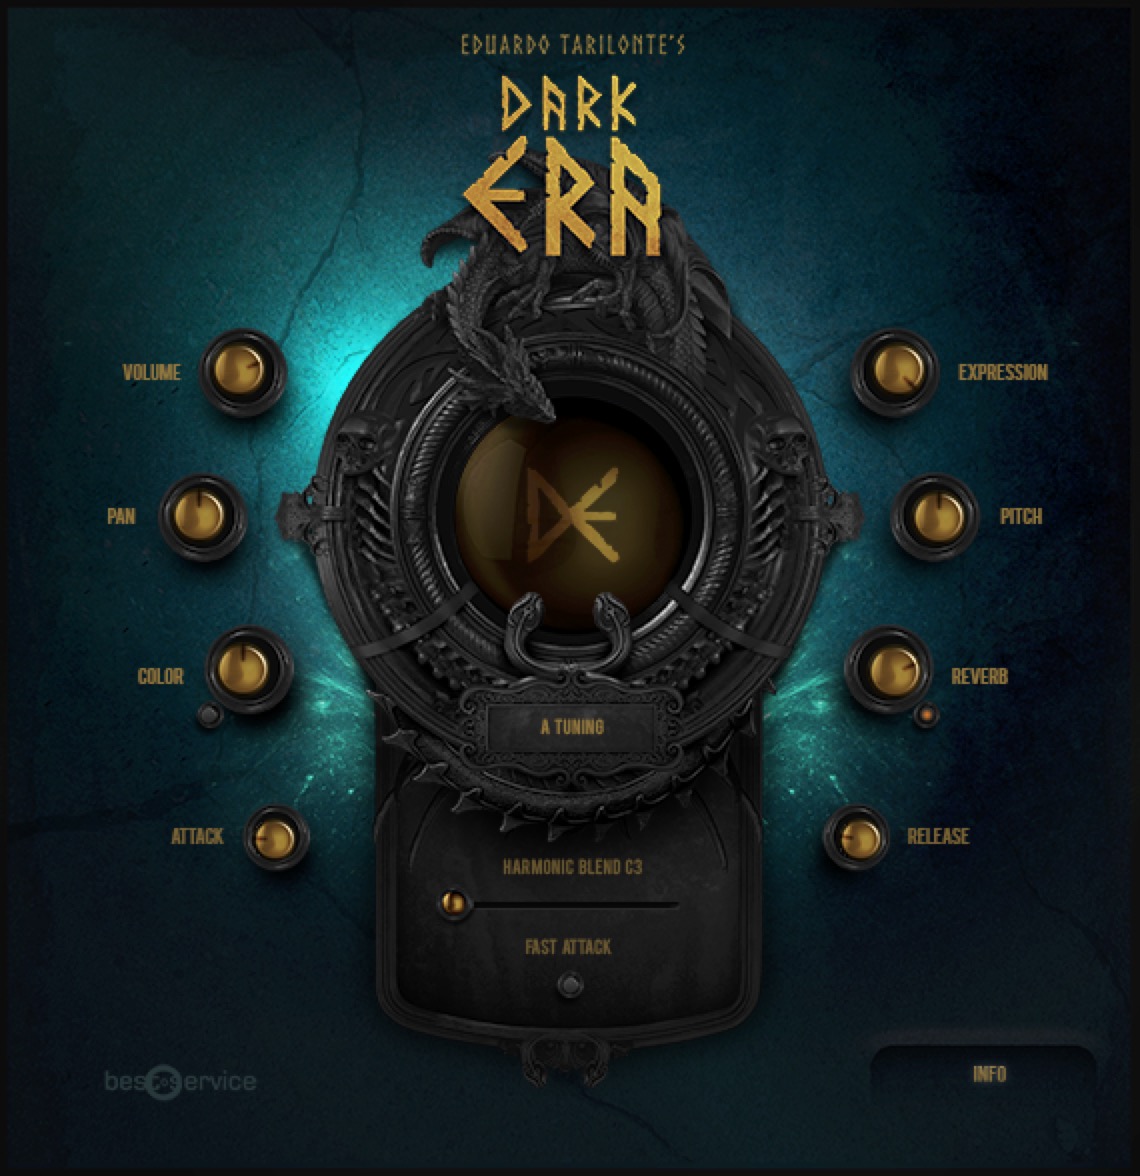 Dark ERA by Eduardo Tarilonte and Best Service Released